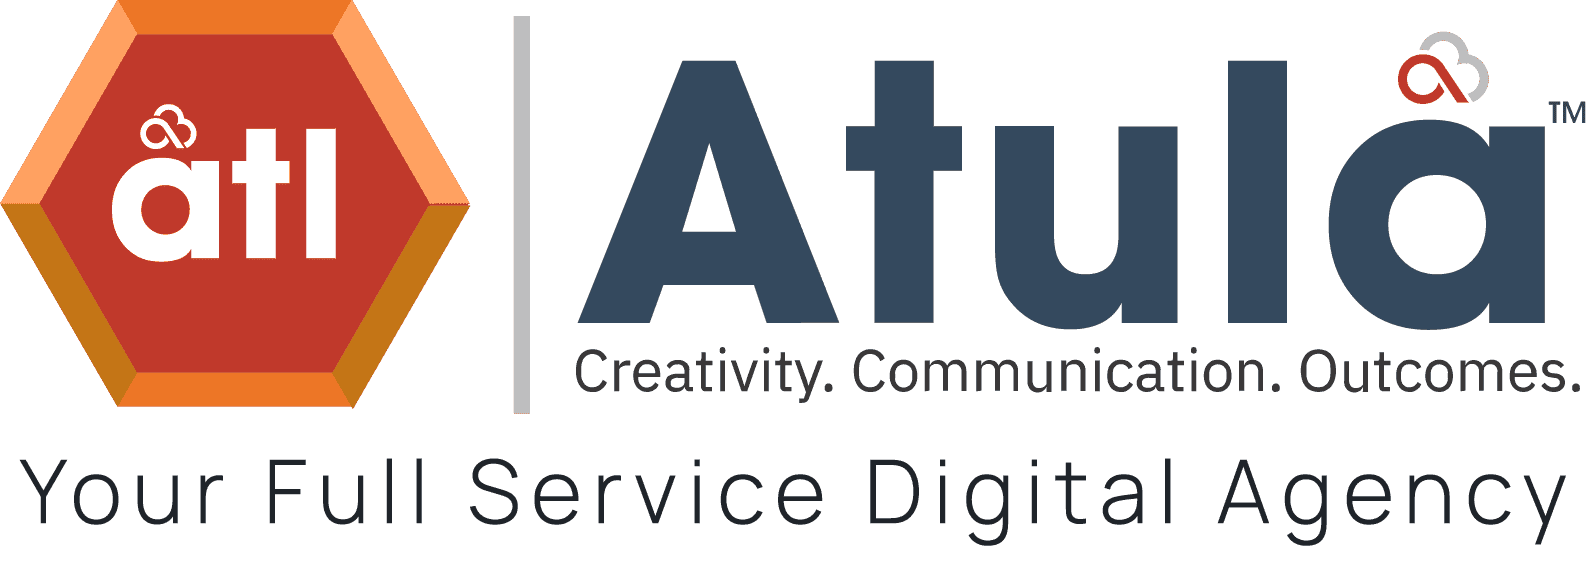 full-service digital agencies